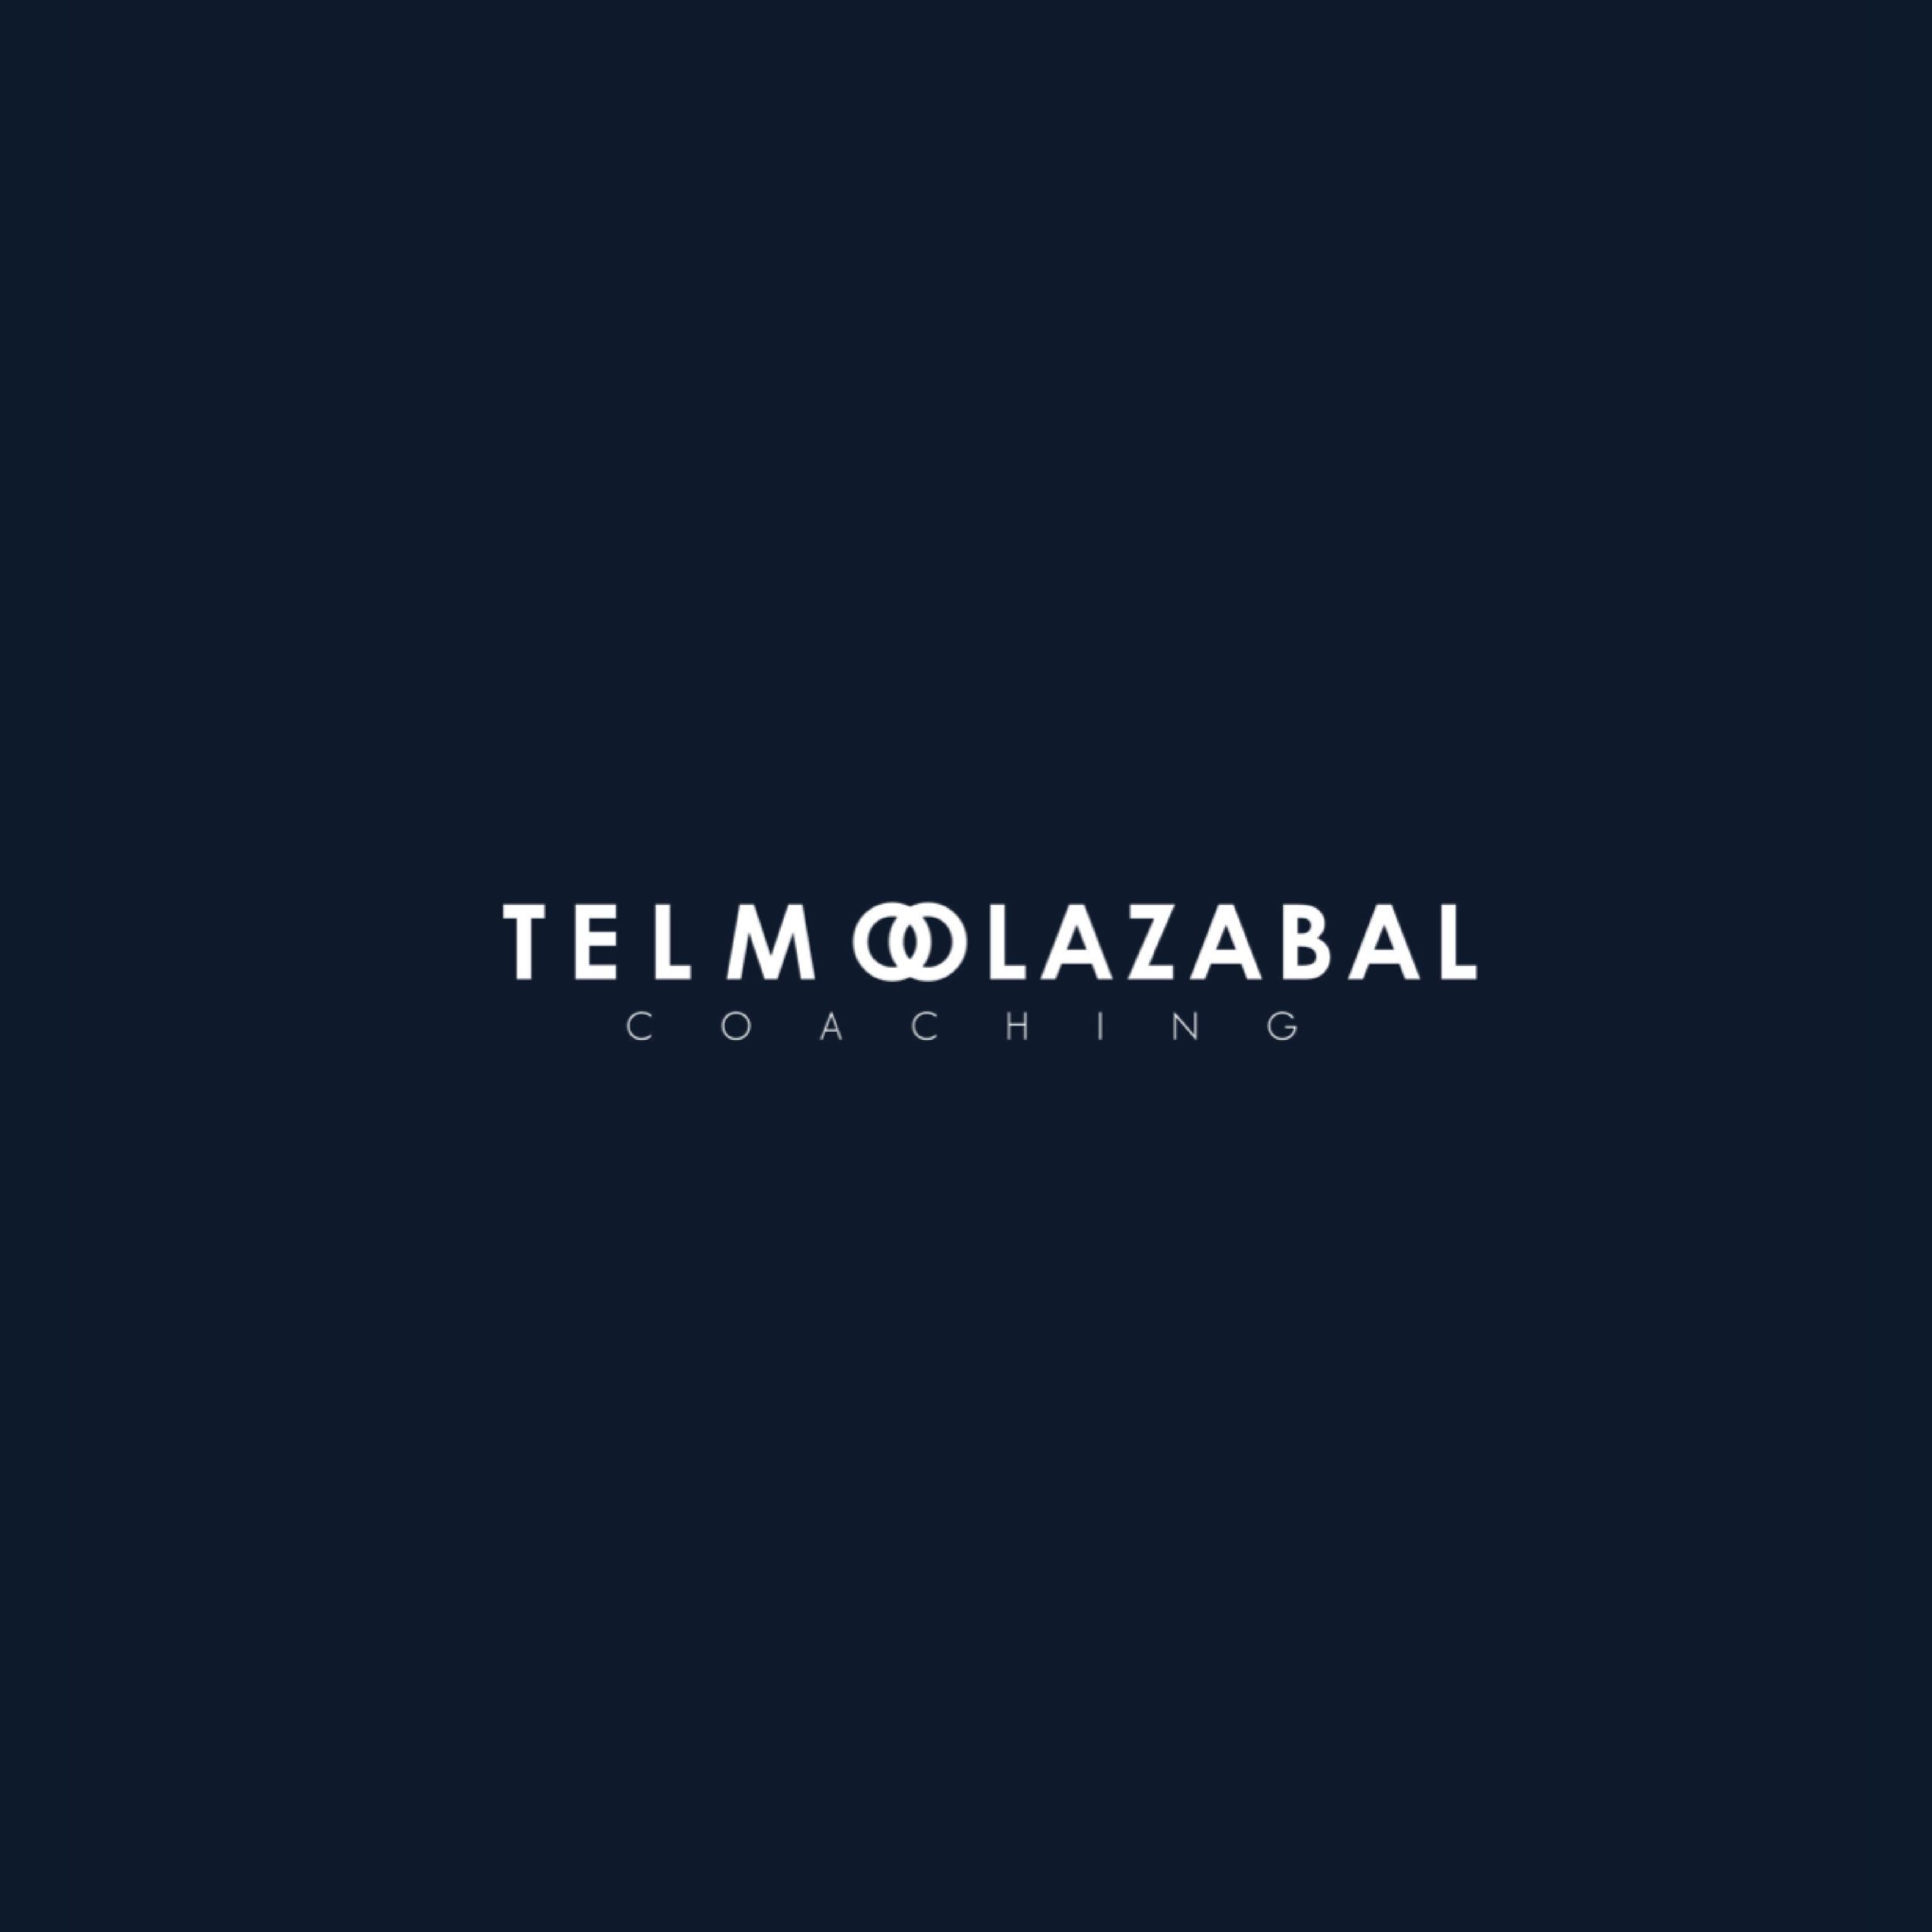 02-TelmoOlazabal-diseño